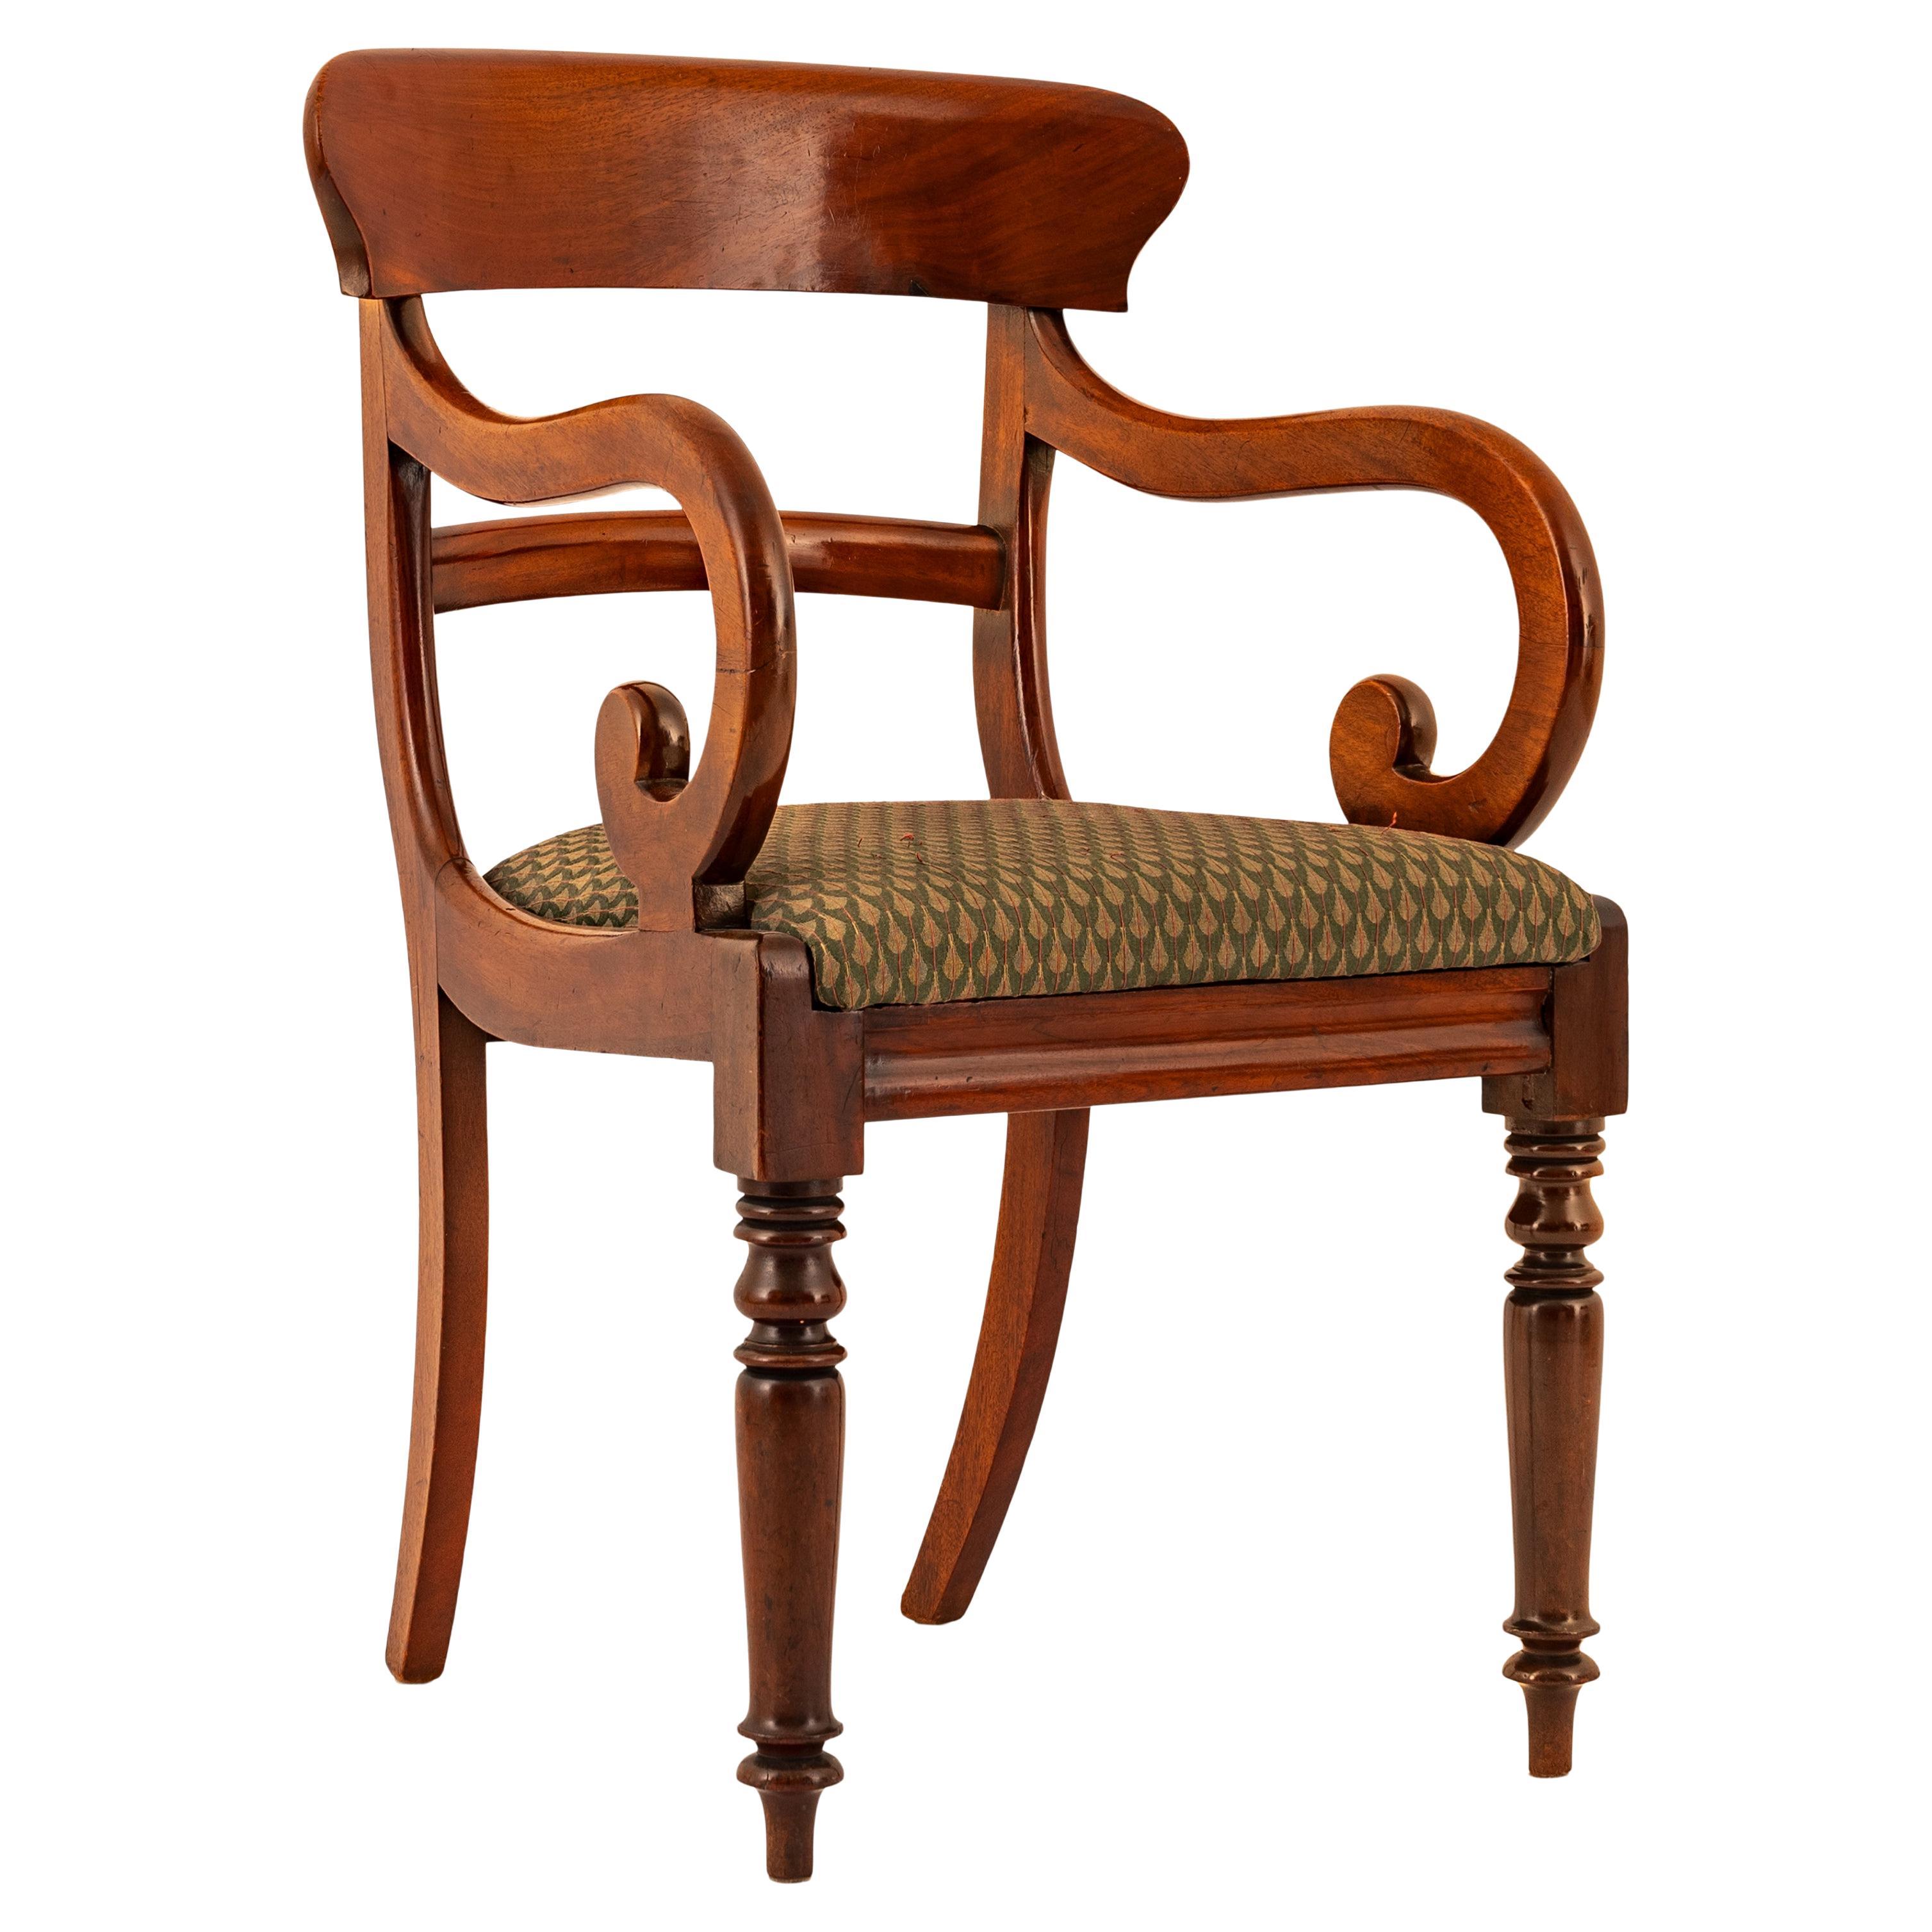 Antique 19th Century Georgian Regency Mahogany Armchair Library Desk Chair 1820 For Sale